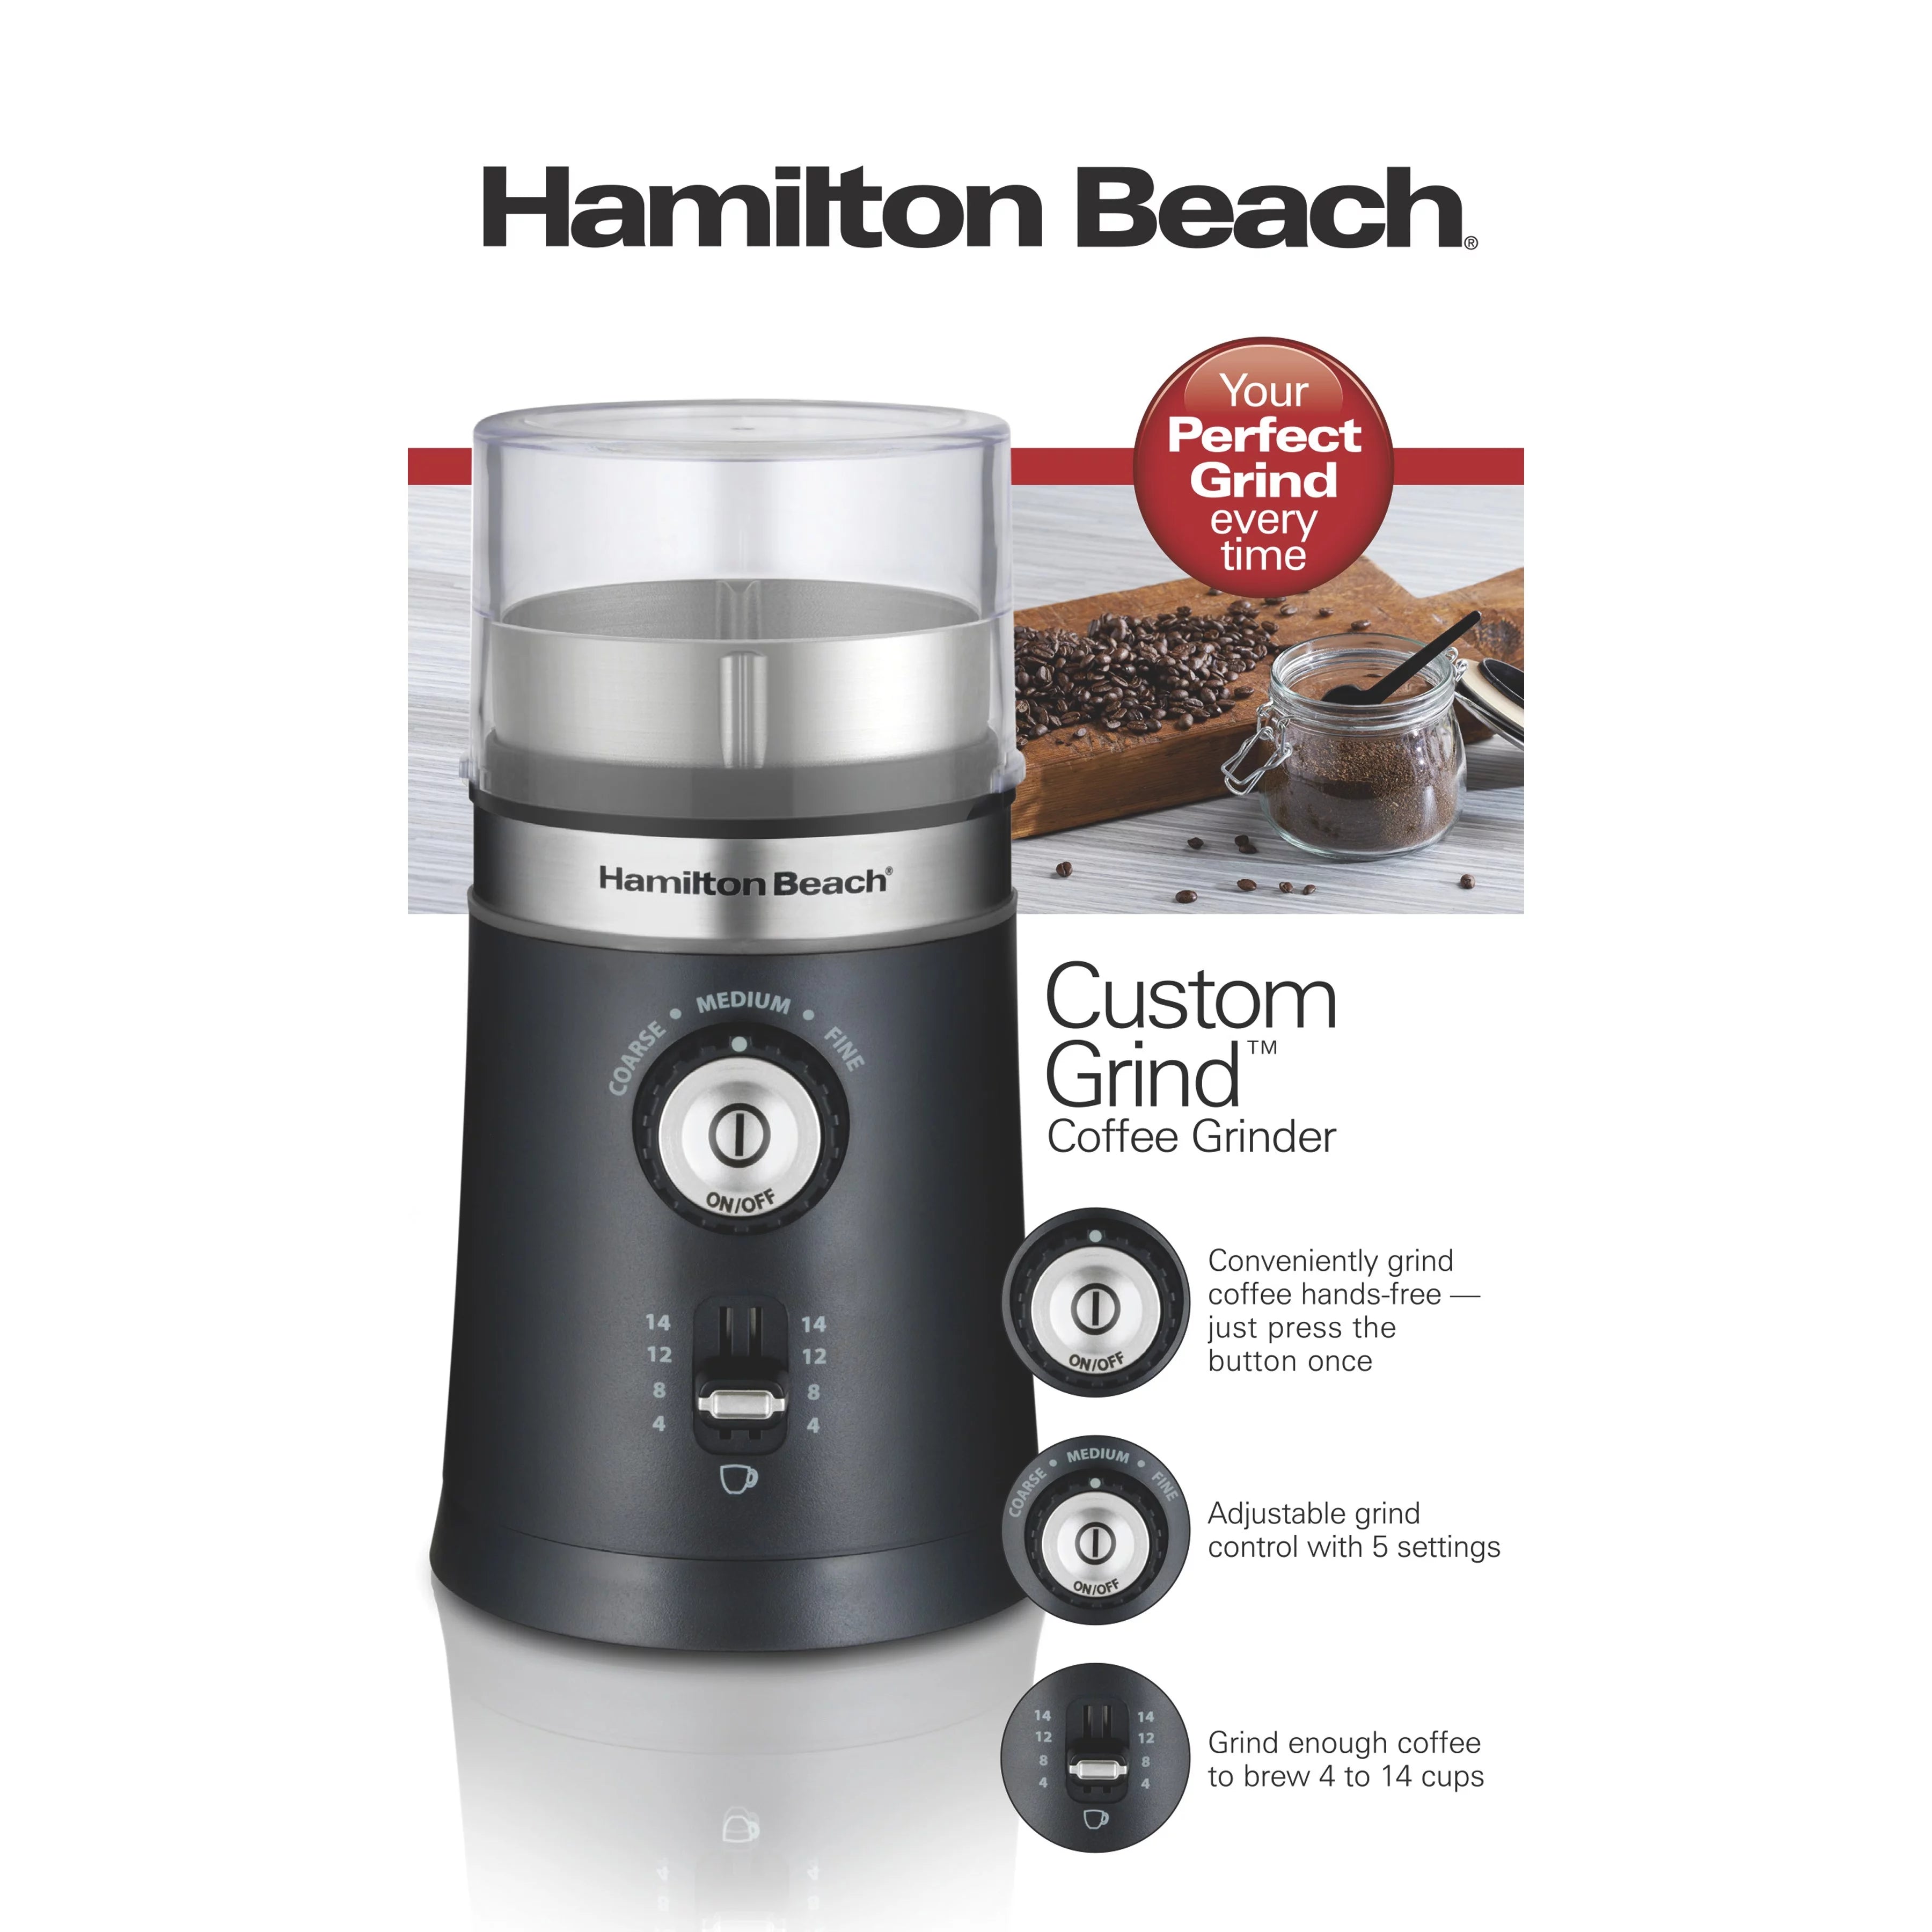 Hamilton Beach Custom Grind Coffee Grinder